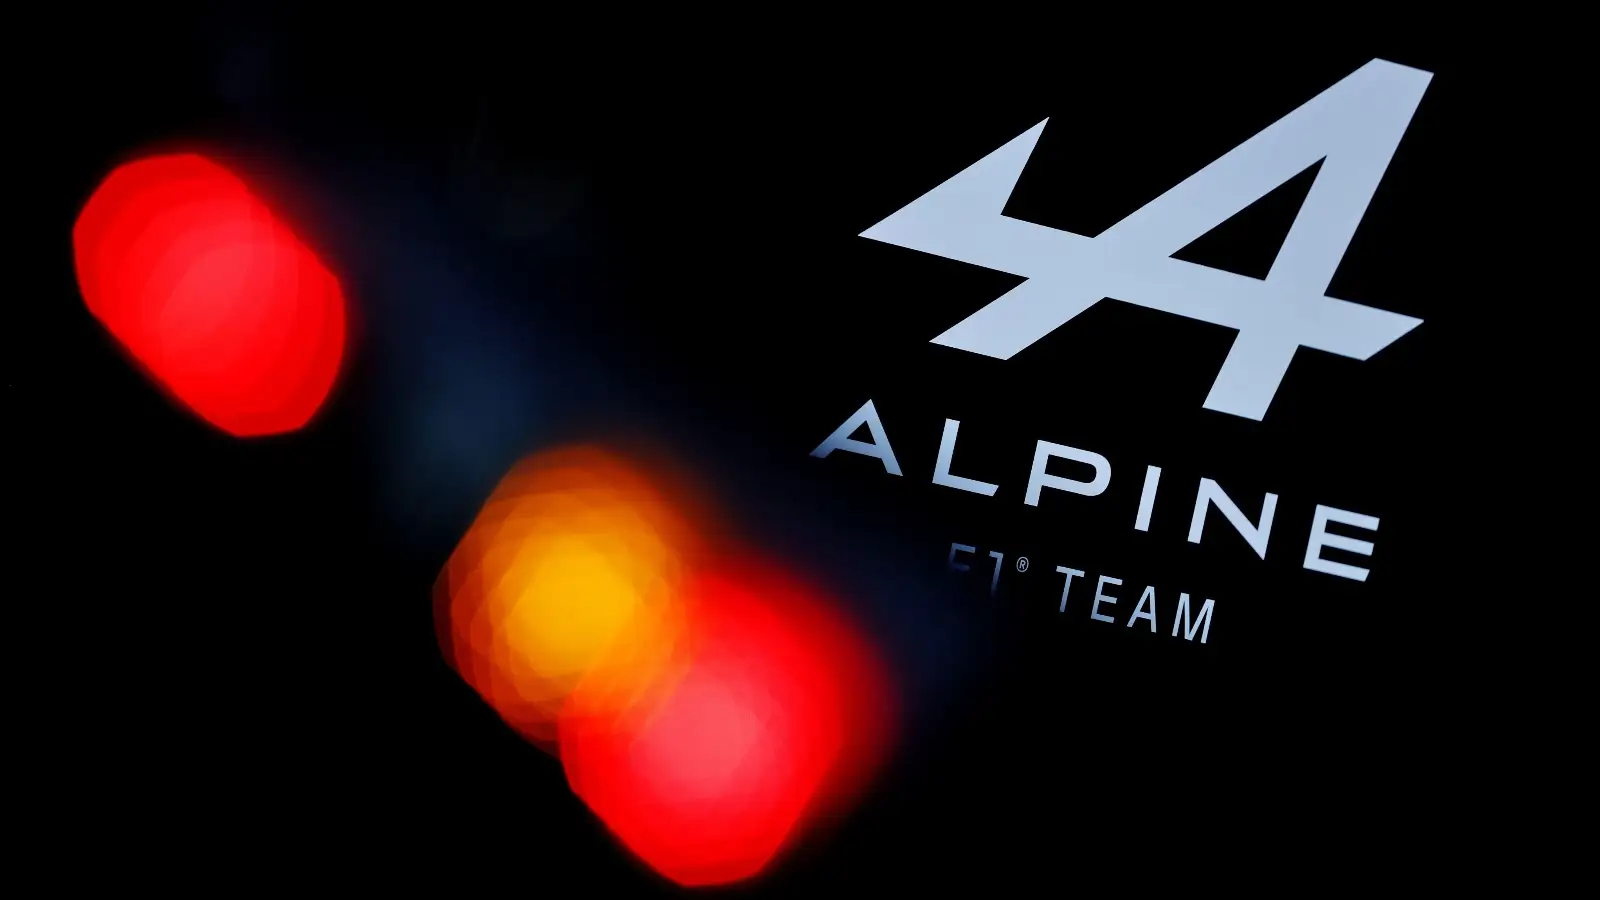 The Alpine logo during the Bahrain Grand Prix.